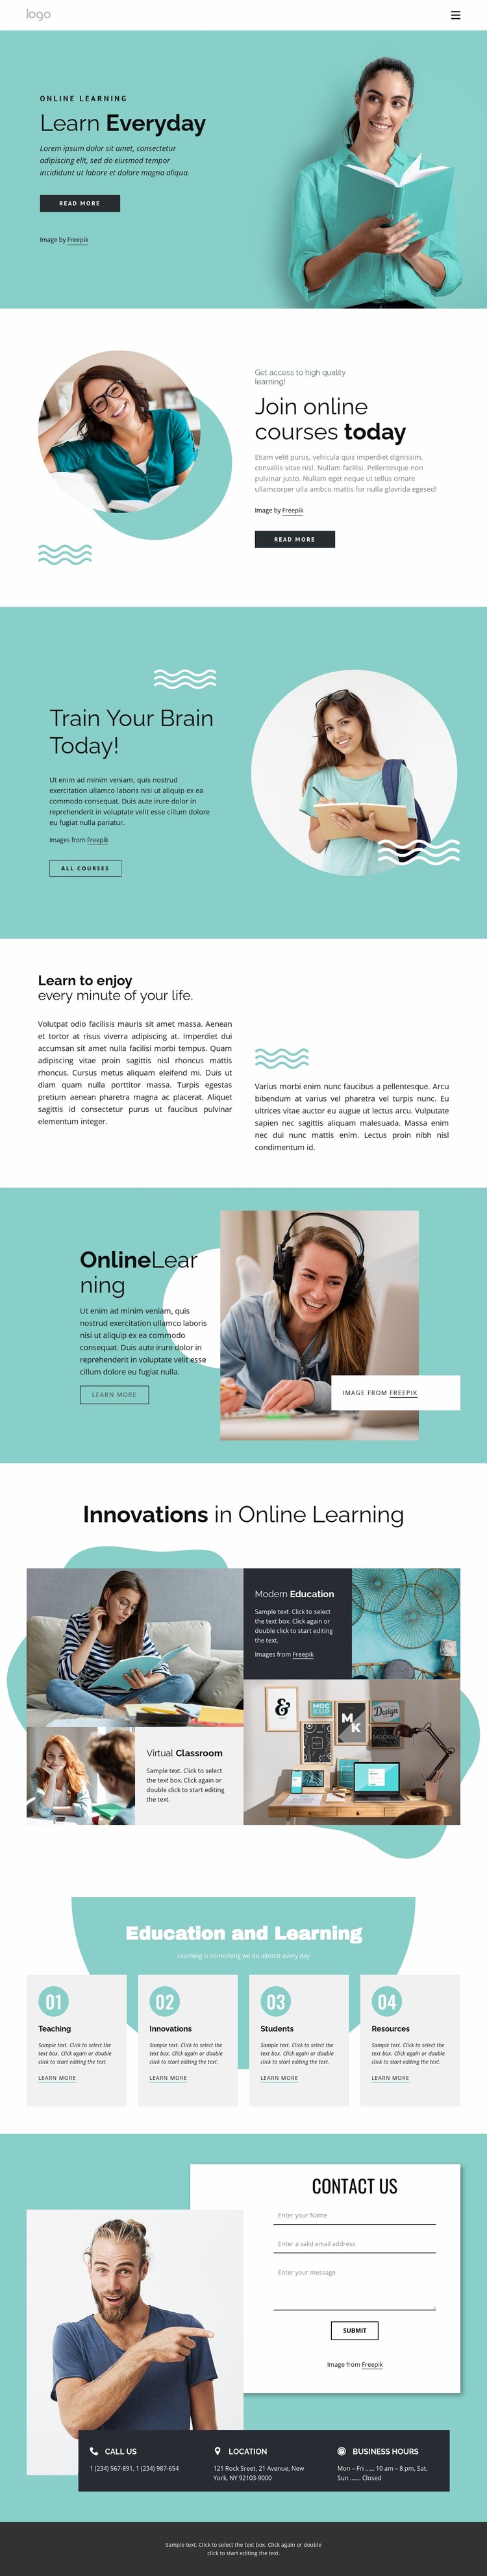 Learning is a lifelong process Website Mockup